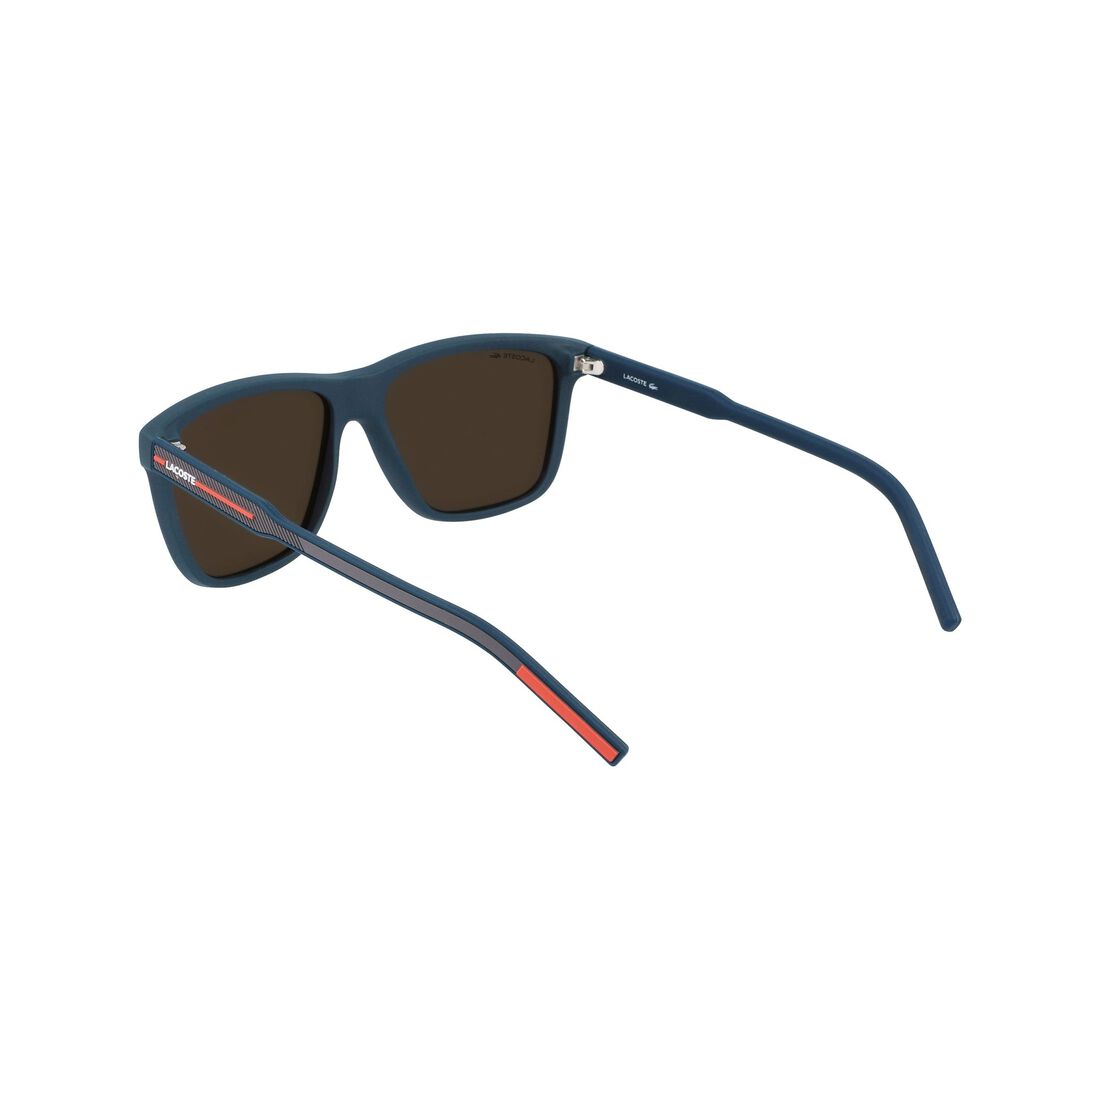 Lacoste Injected Sonnenbrille Herren Blau | PMEH-40891